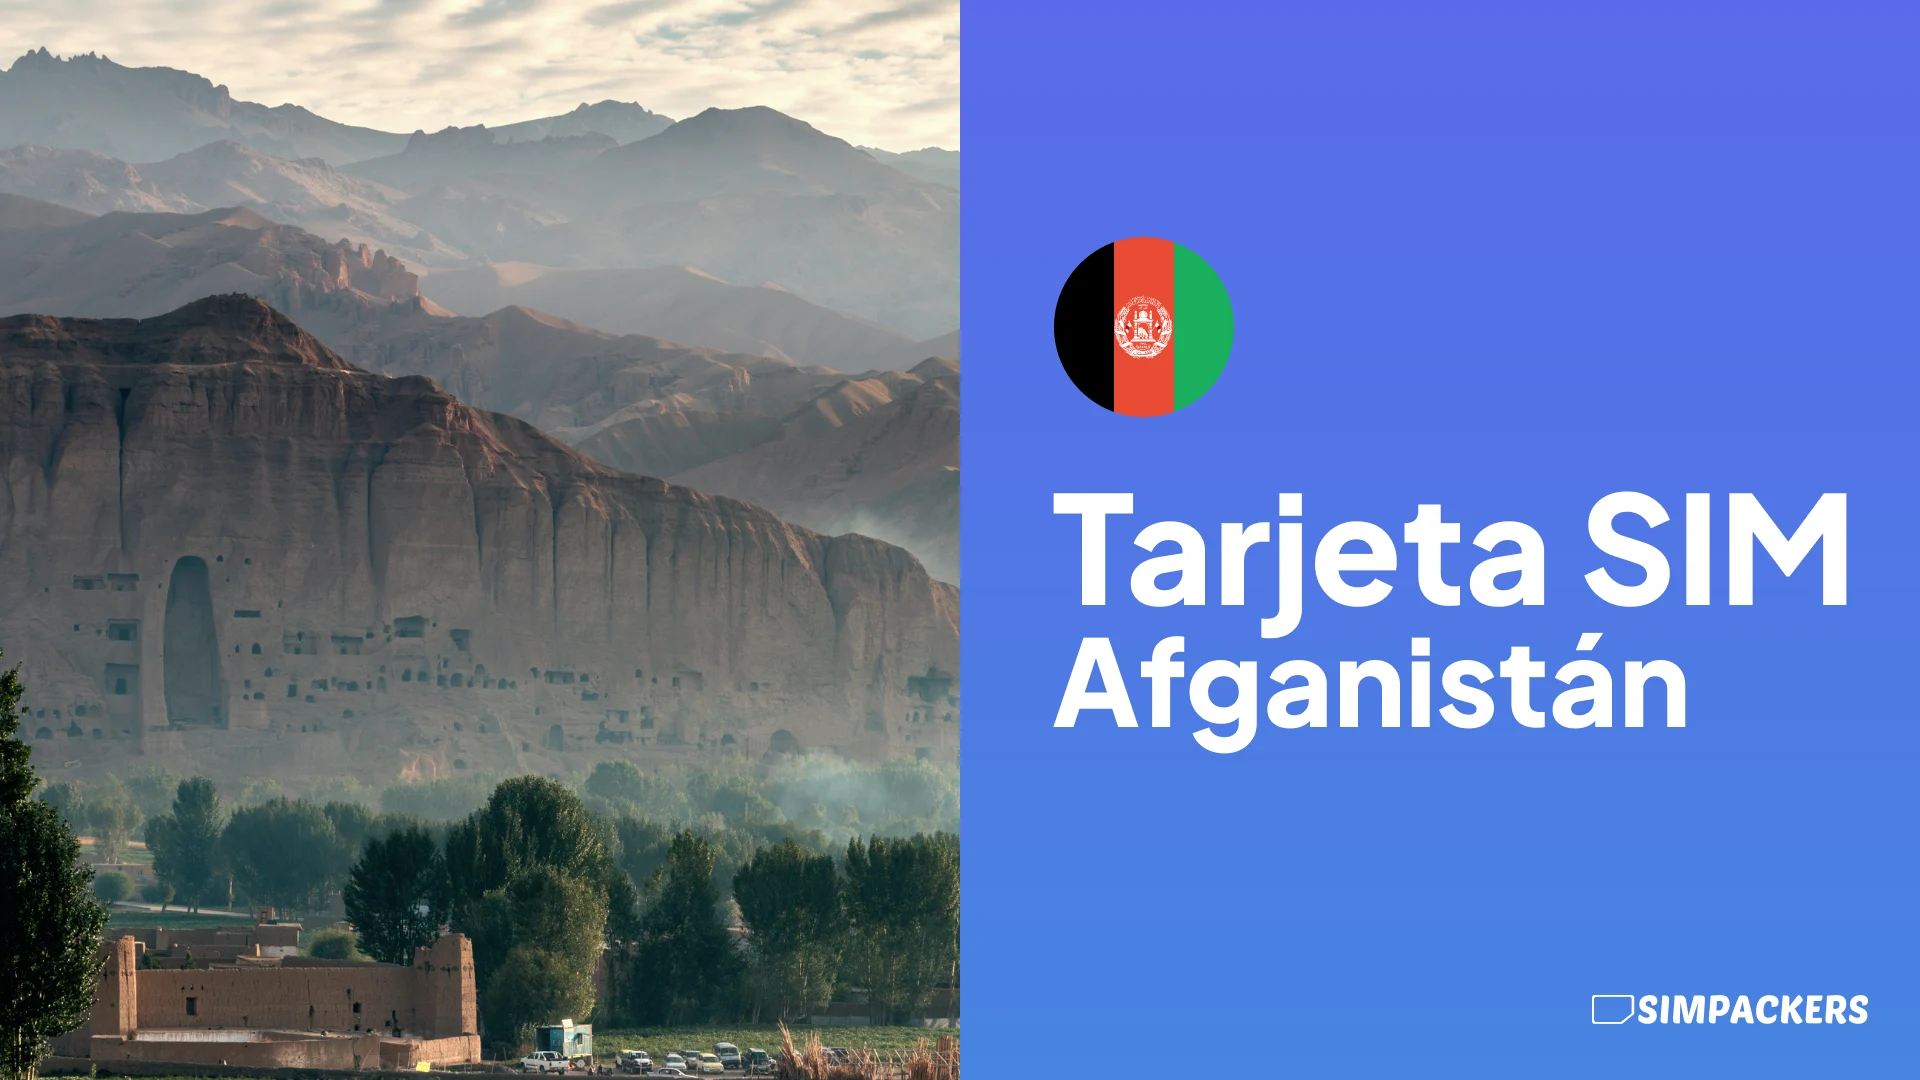 ES/FEATURED_IMAGES/tarjeta-sim-afganistan.webp